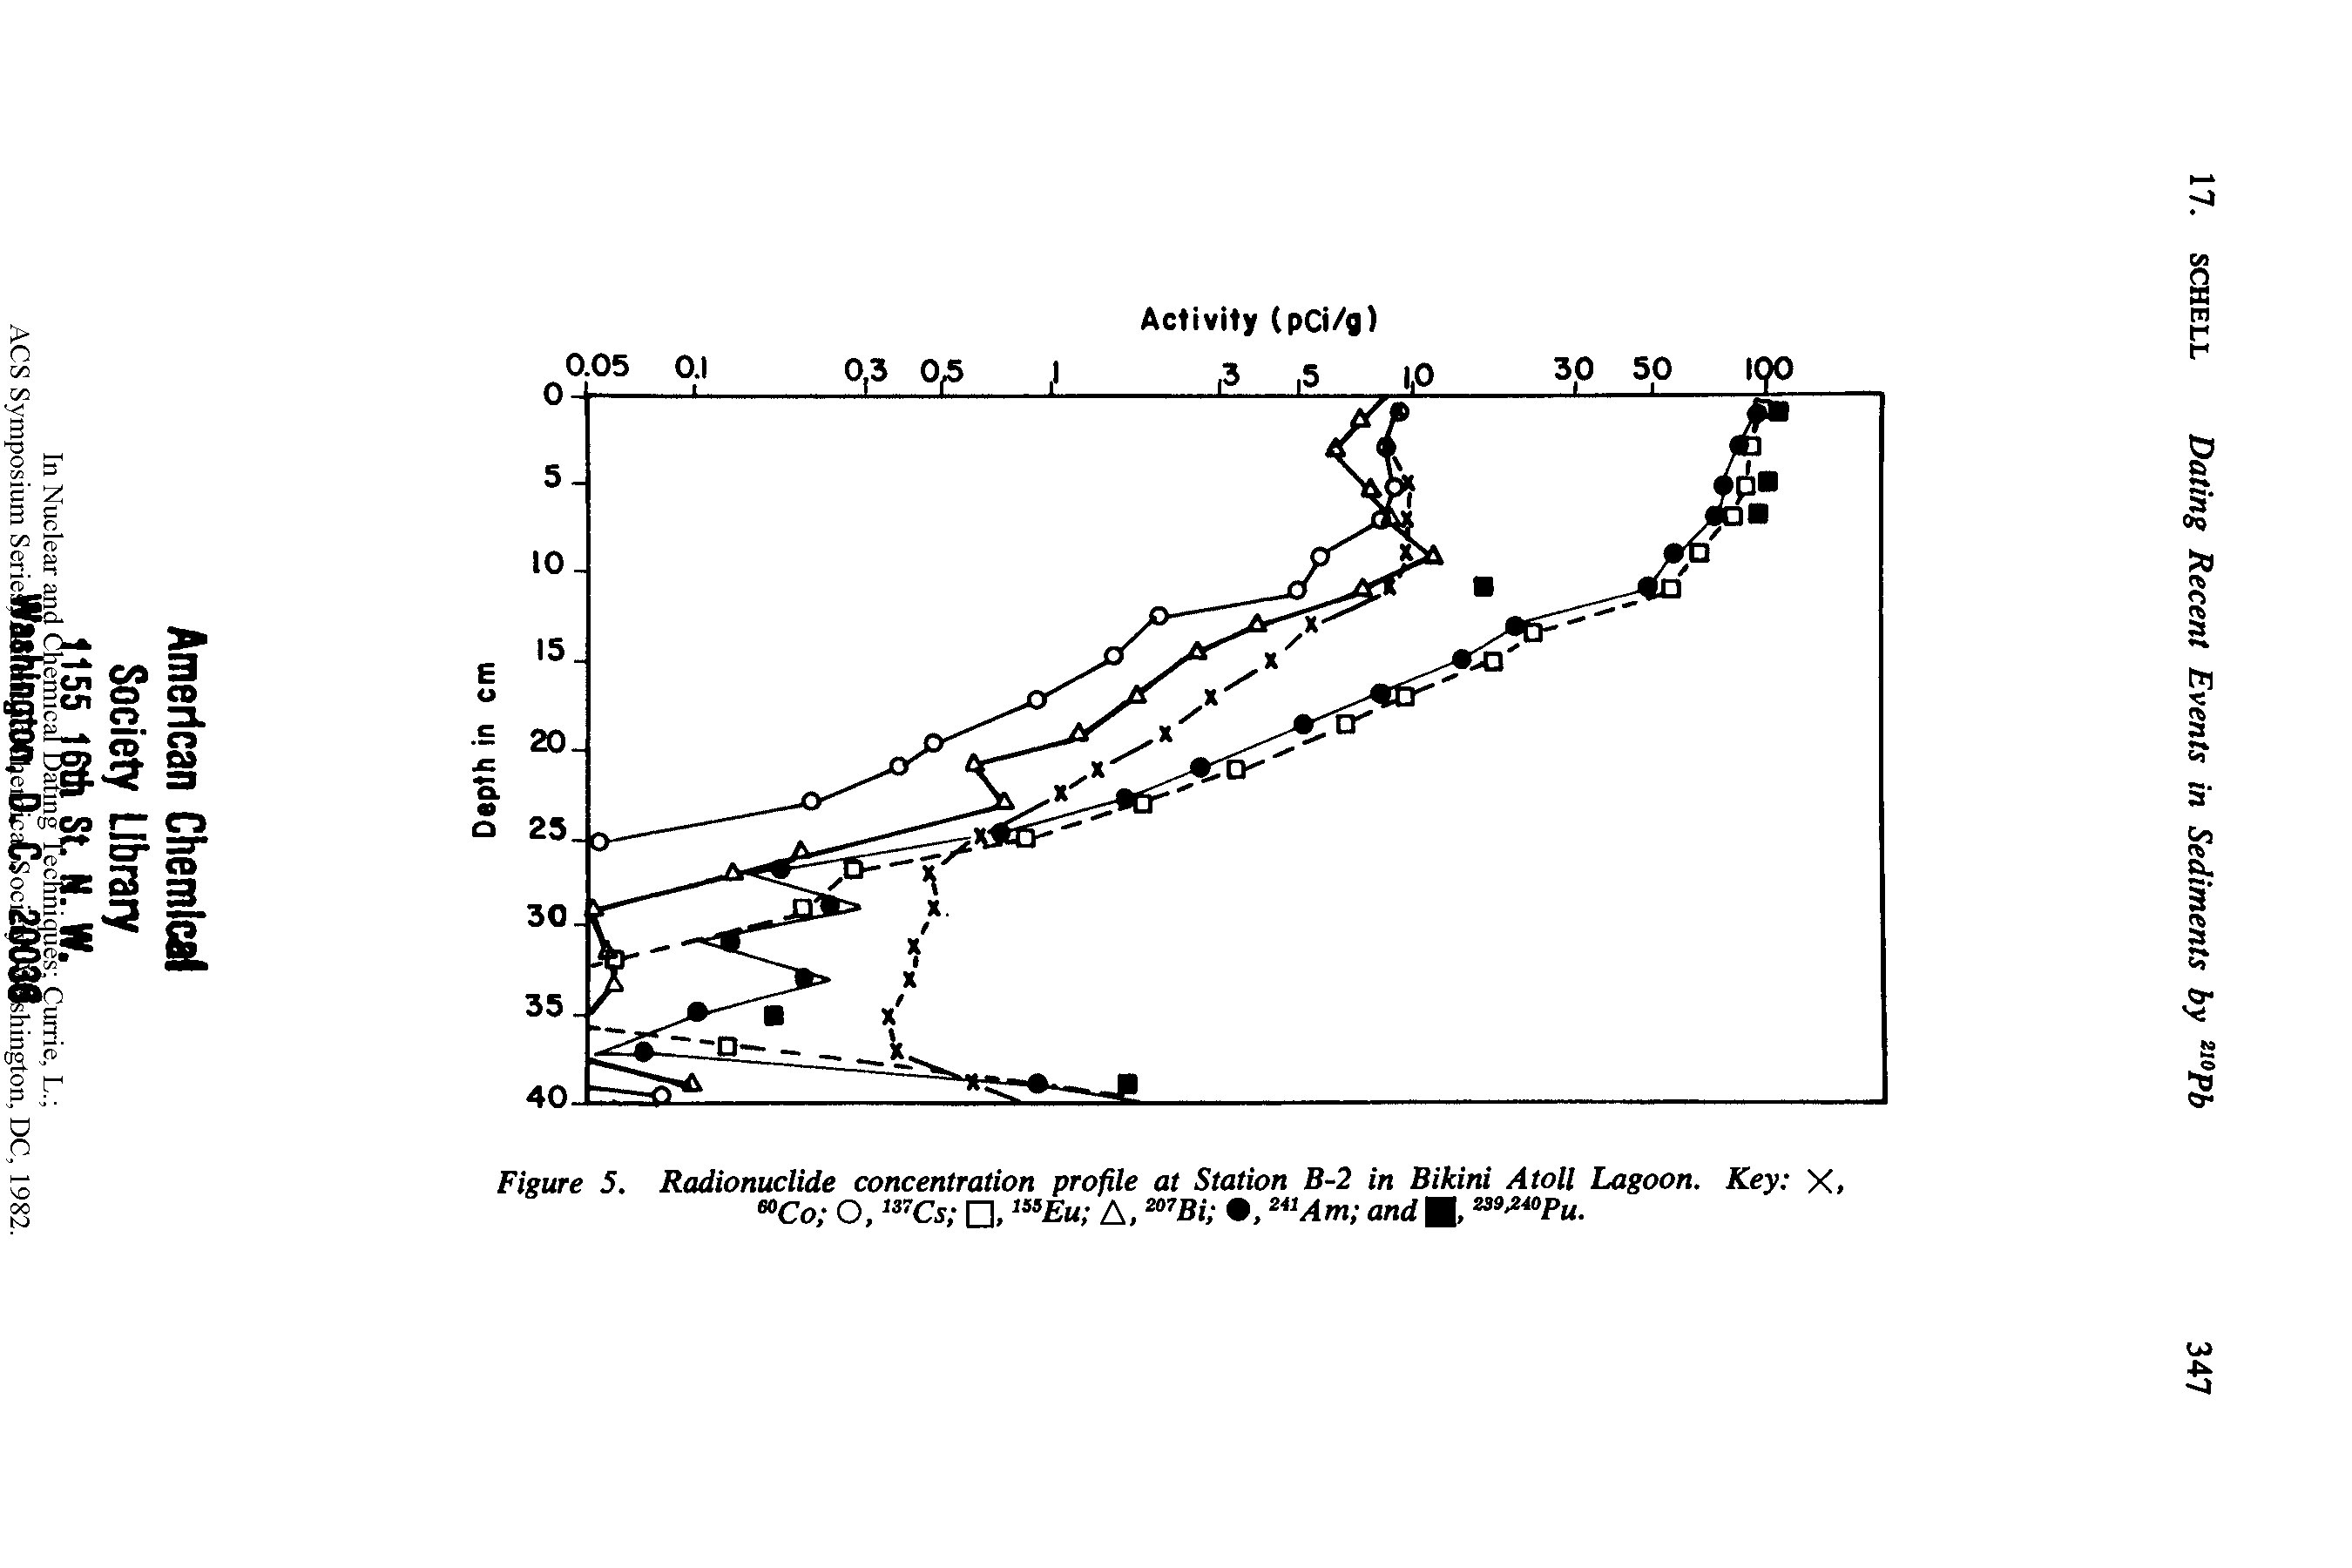 Figure 5. Radionuclide concentration profile at Station B-2 in Bikini Atoll Lagoon. Key X. Co 0,13TCs , lssEu A, 207Bi ,241 Am and >...